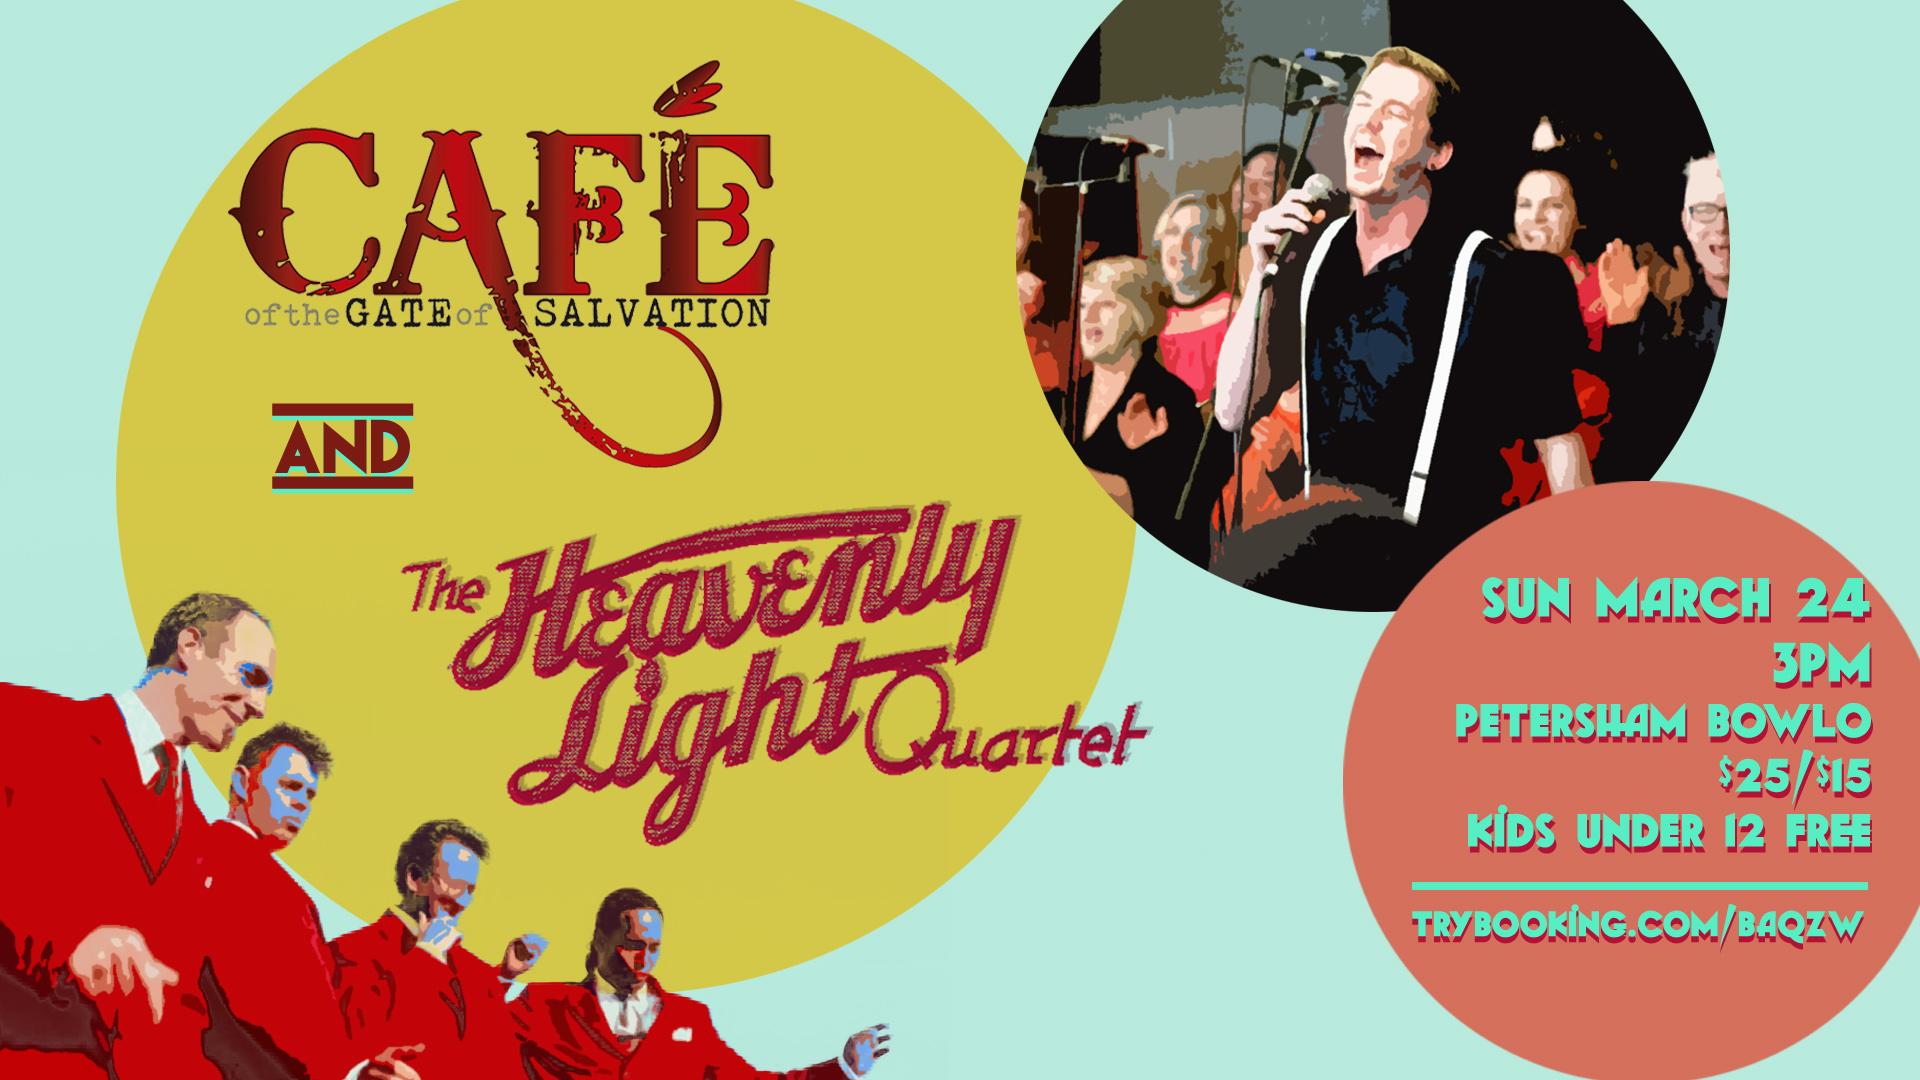 Enter Gospel Heaven - Cafe with the Heavenly Light Quartet